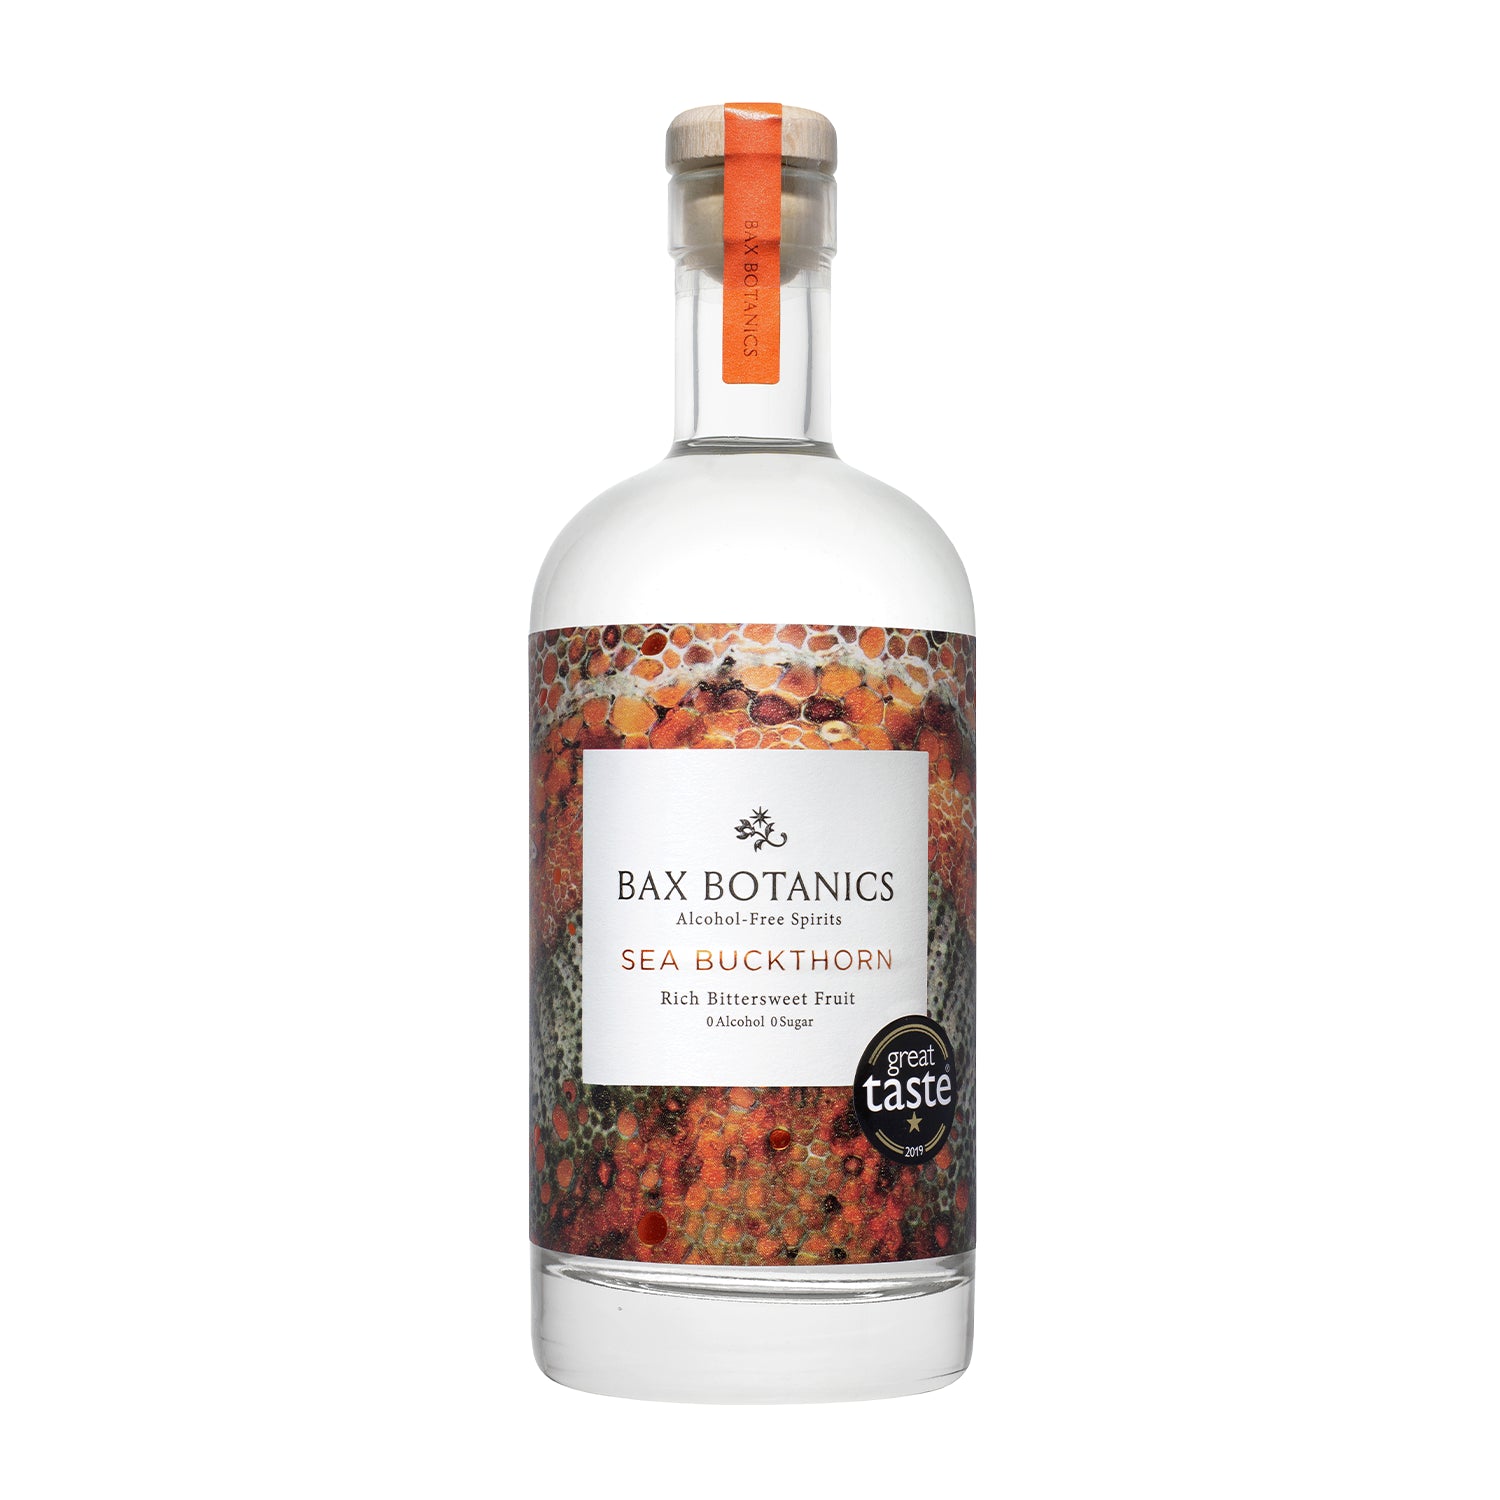 Non-alcoholic spirit Bax Botanics Sea Buckthorn